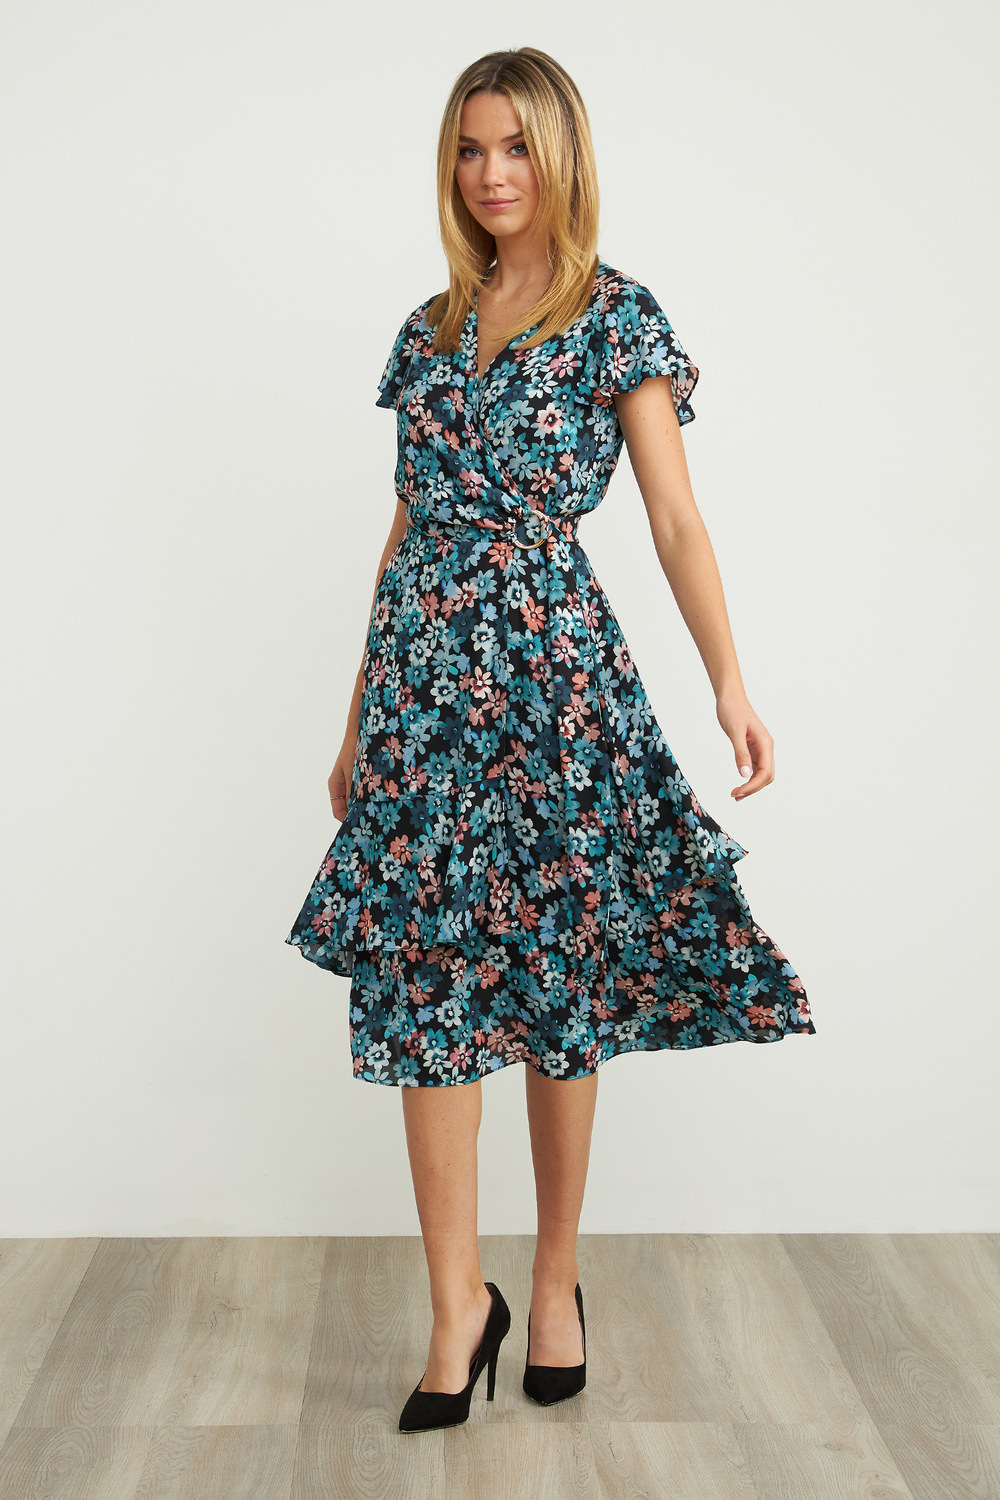 Joseph Ribkoff Floral Dress Style 203494. Black/multi